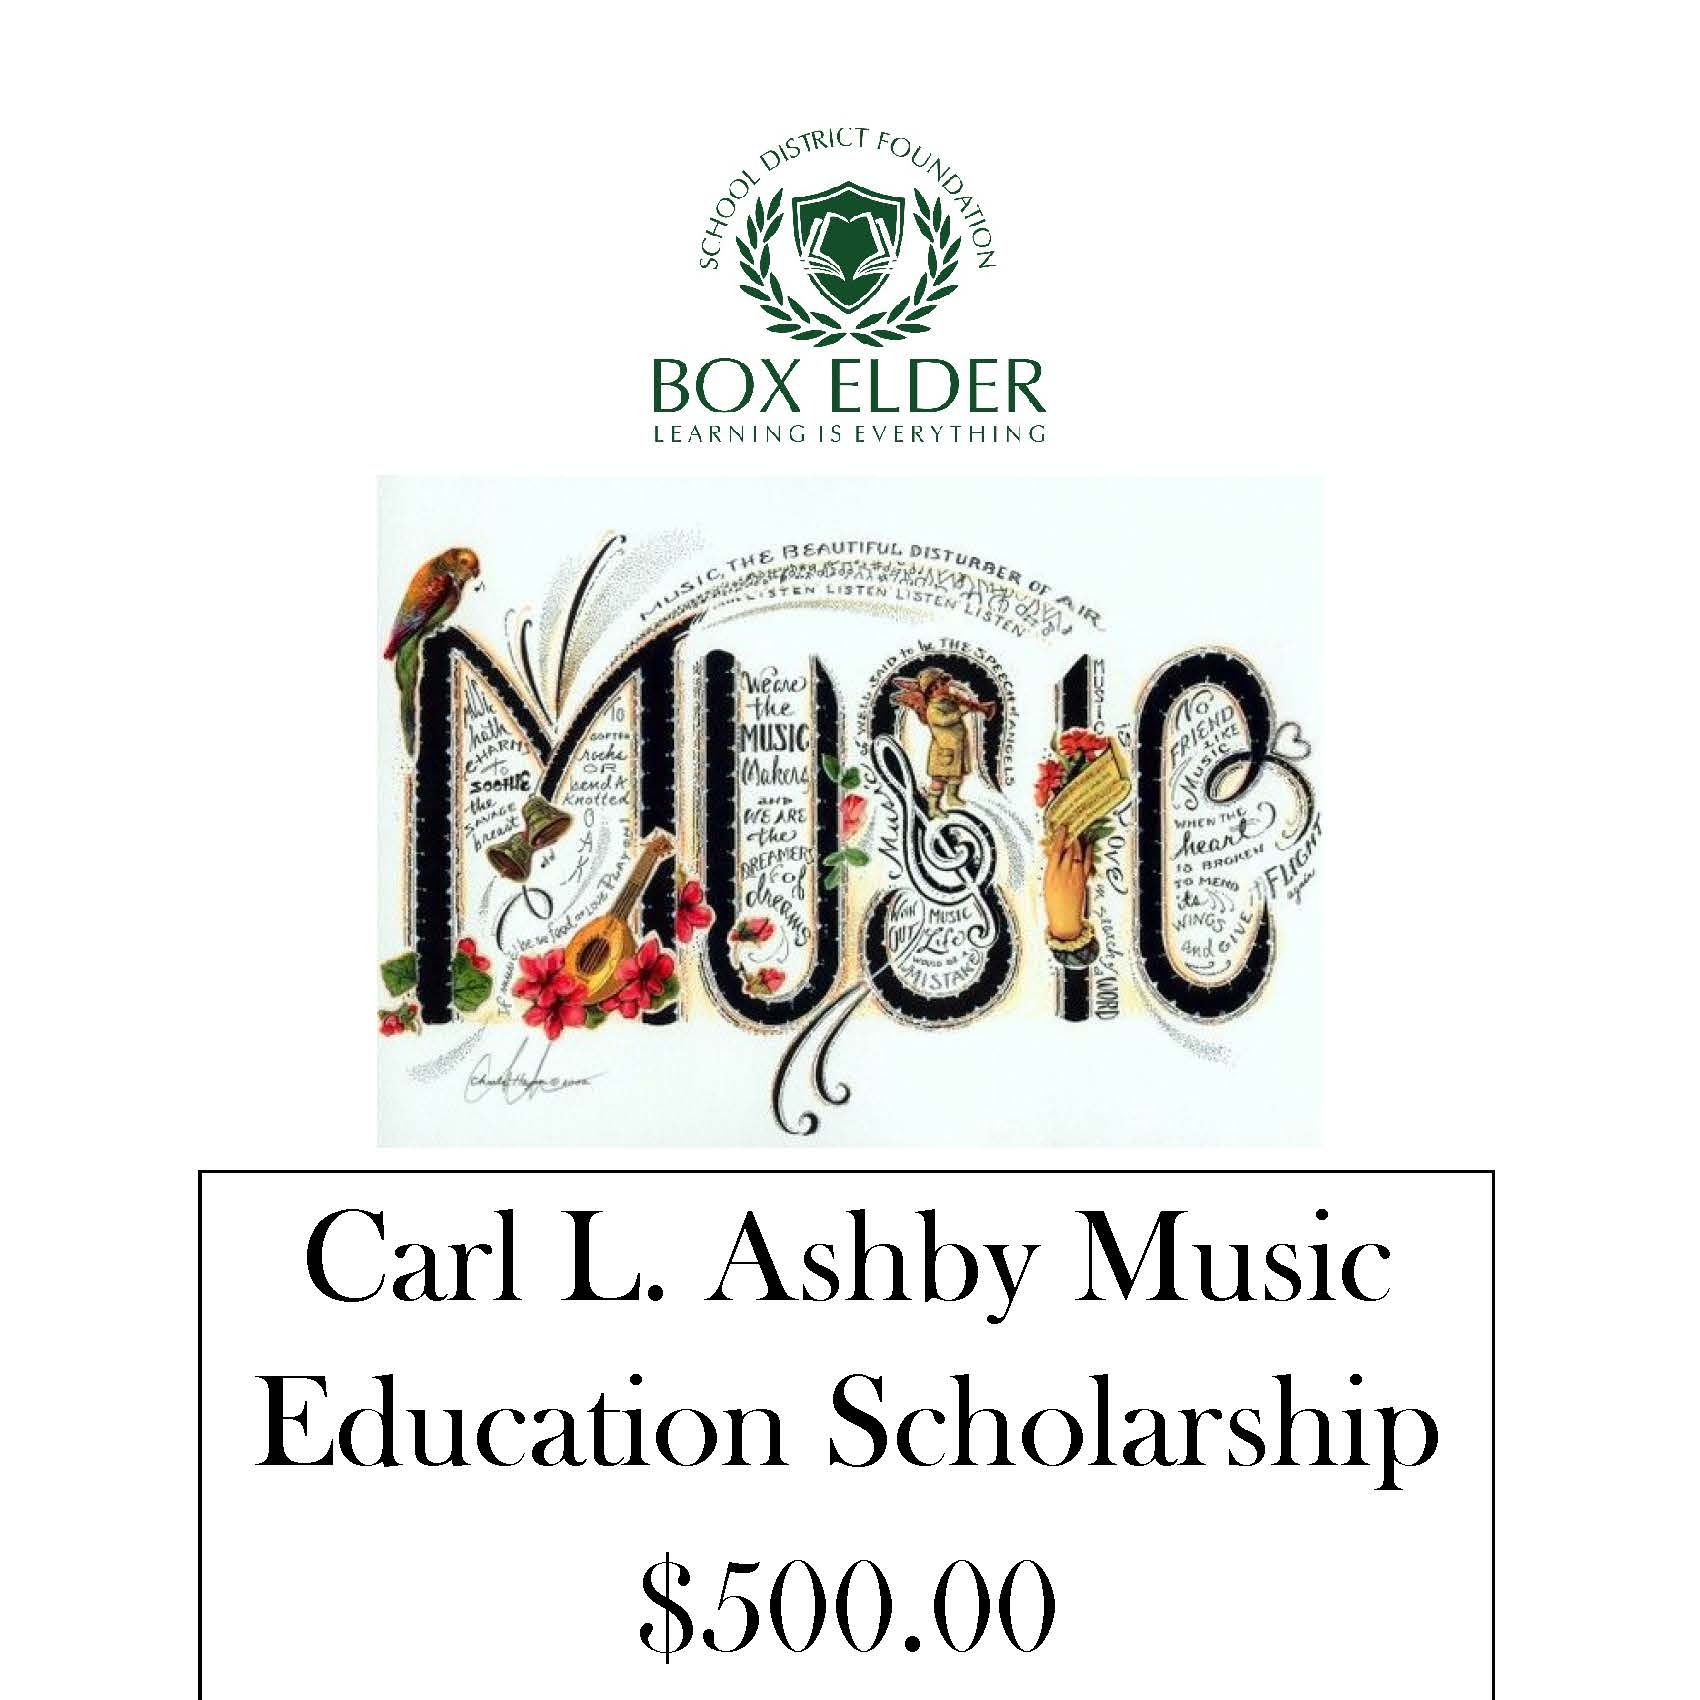 Carl L. Ashby Music Education Scholarship